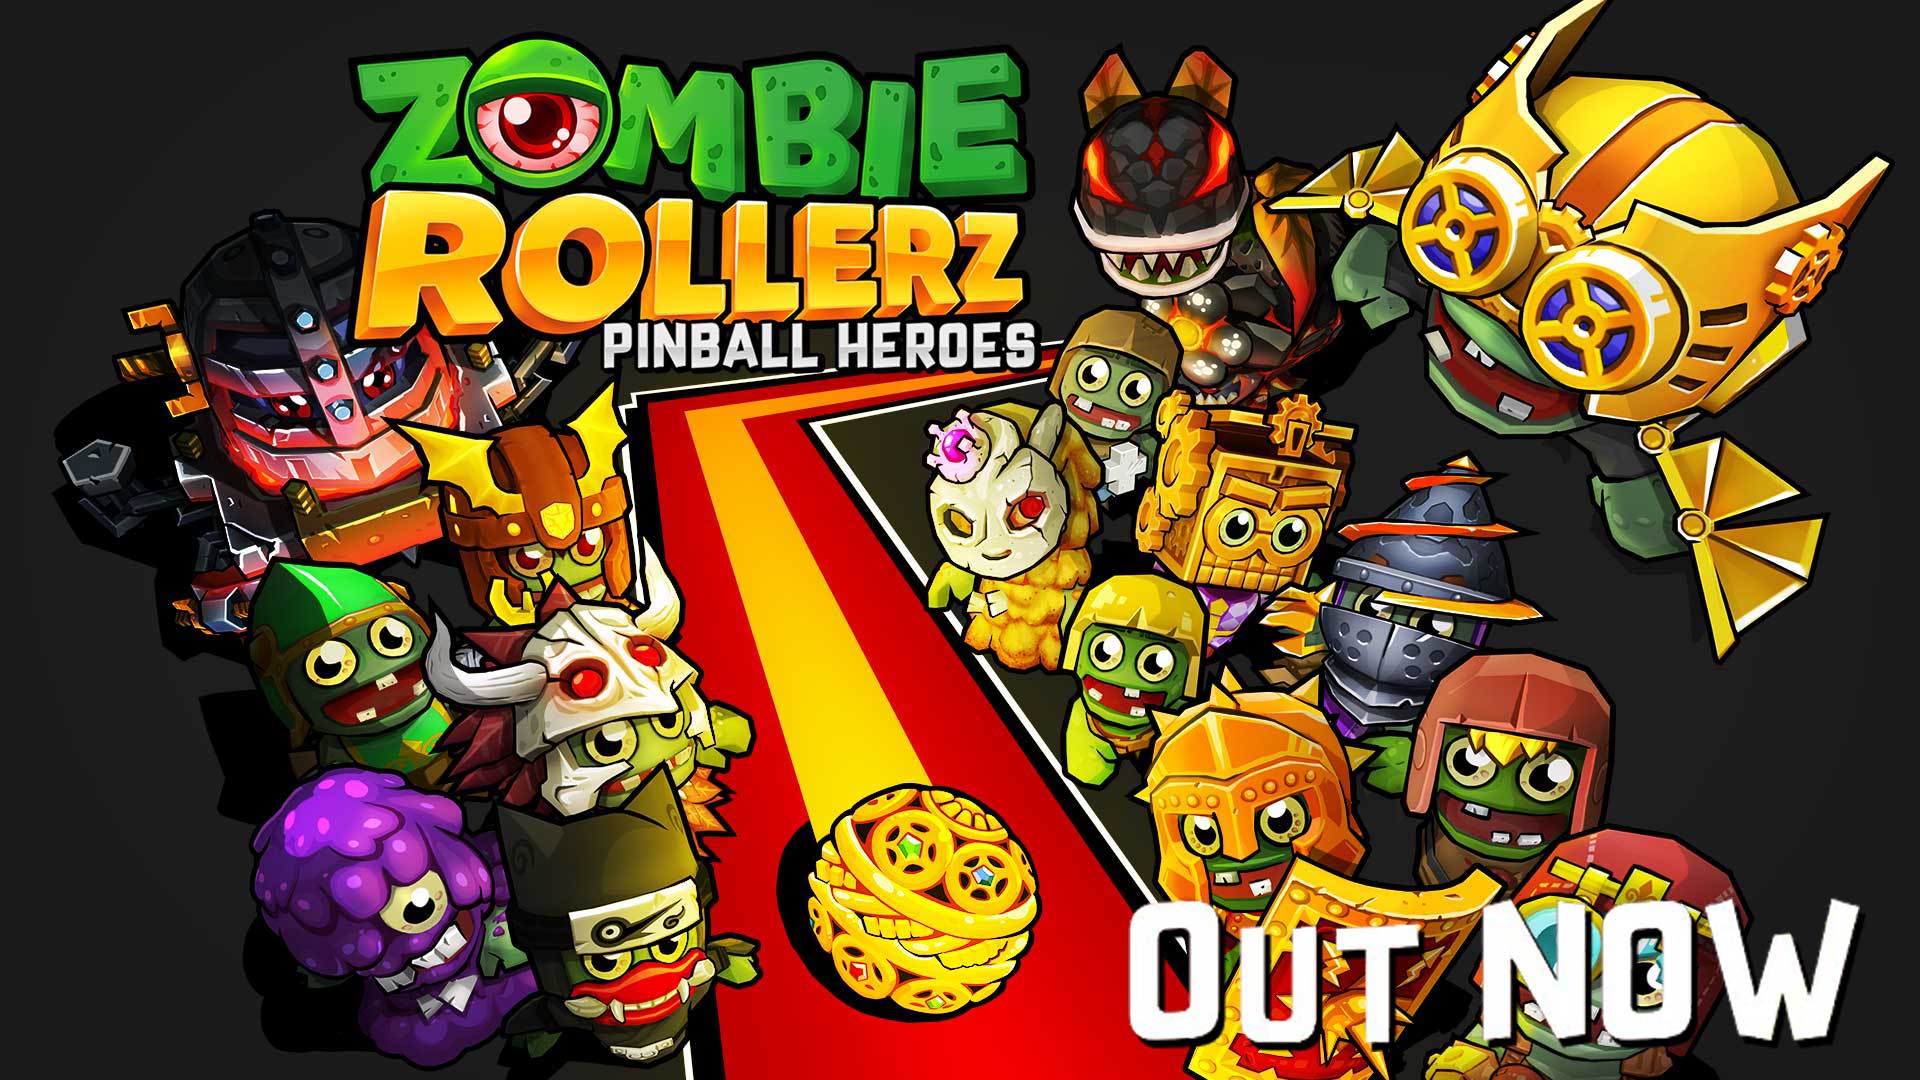 Zombie Rollerz Pinball Heroes Released